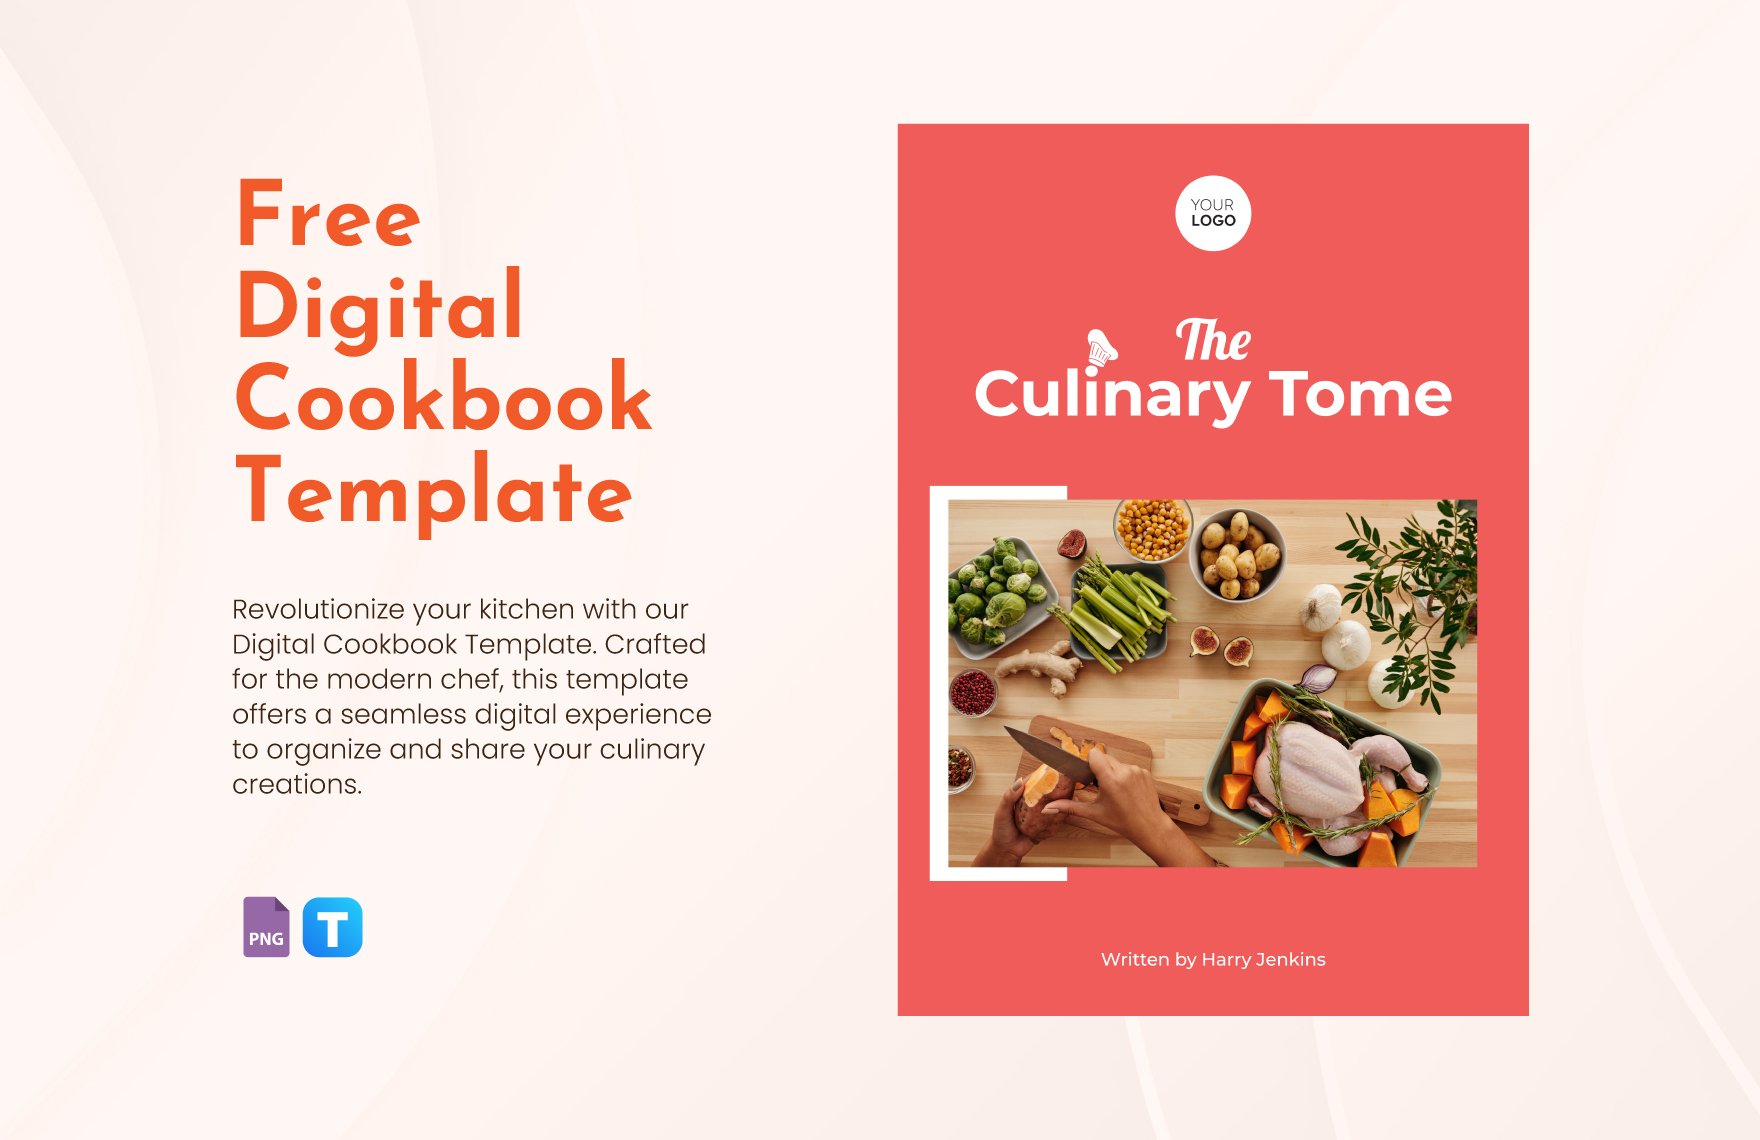 Free Digital Cookbook Template